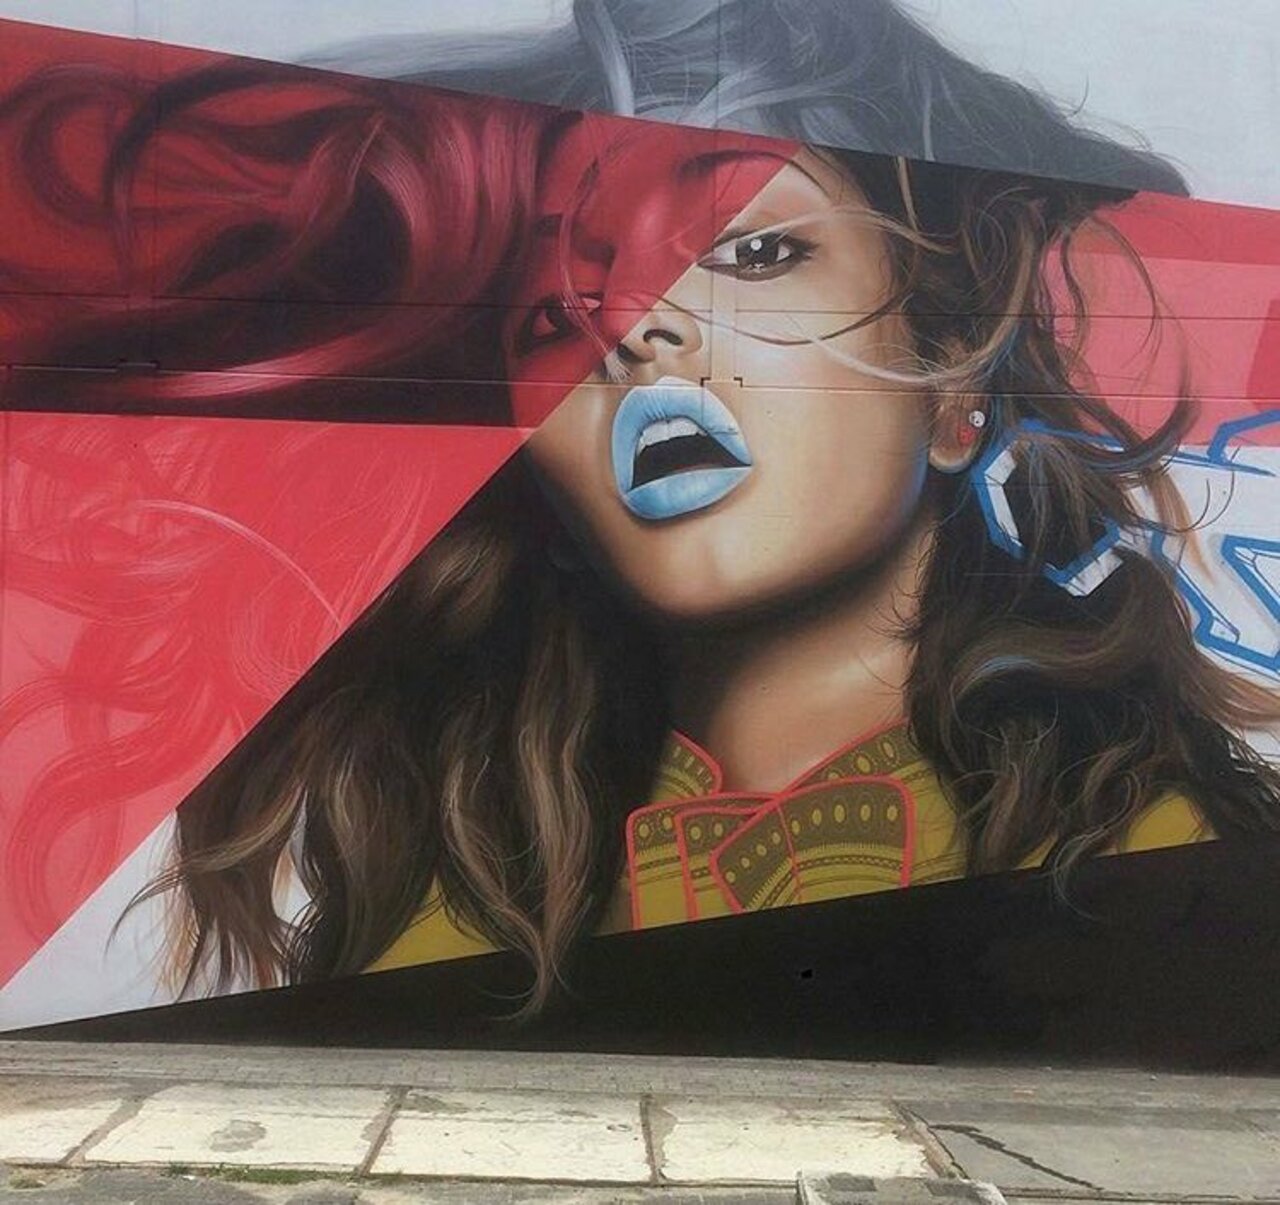 #mural by Belin #Eindhoven #Holland #art #graffiti #streetart #urbanart https://t.co/c5hmUf1gFo